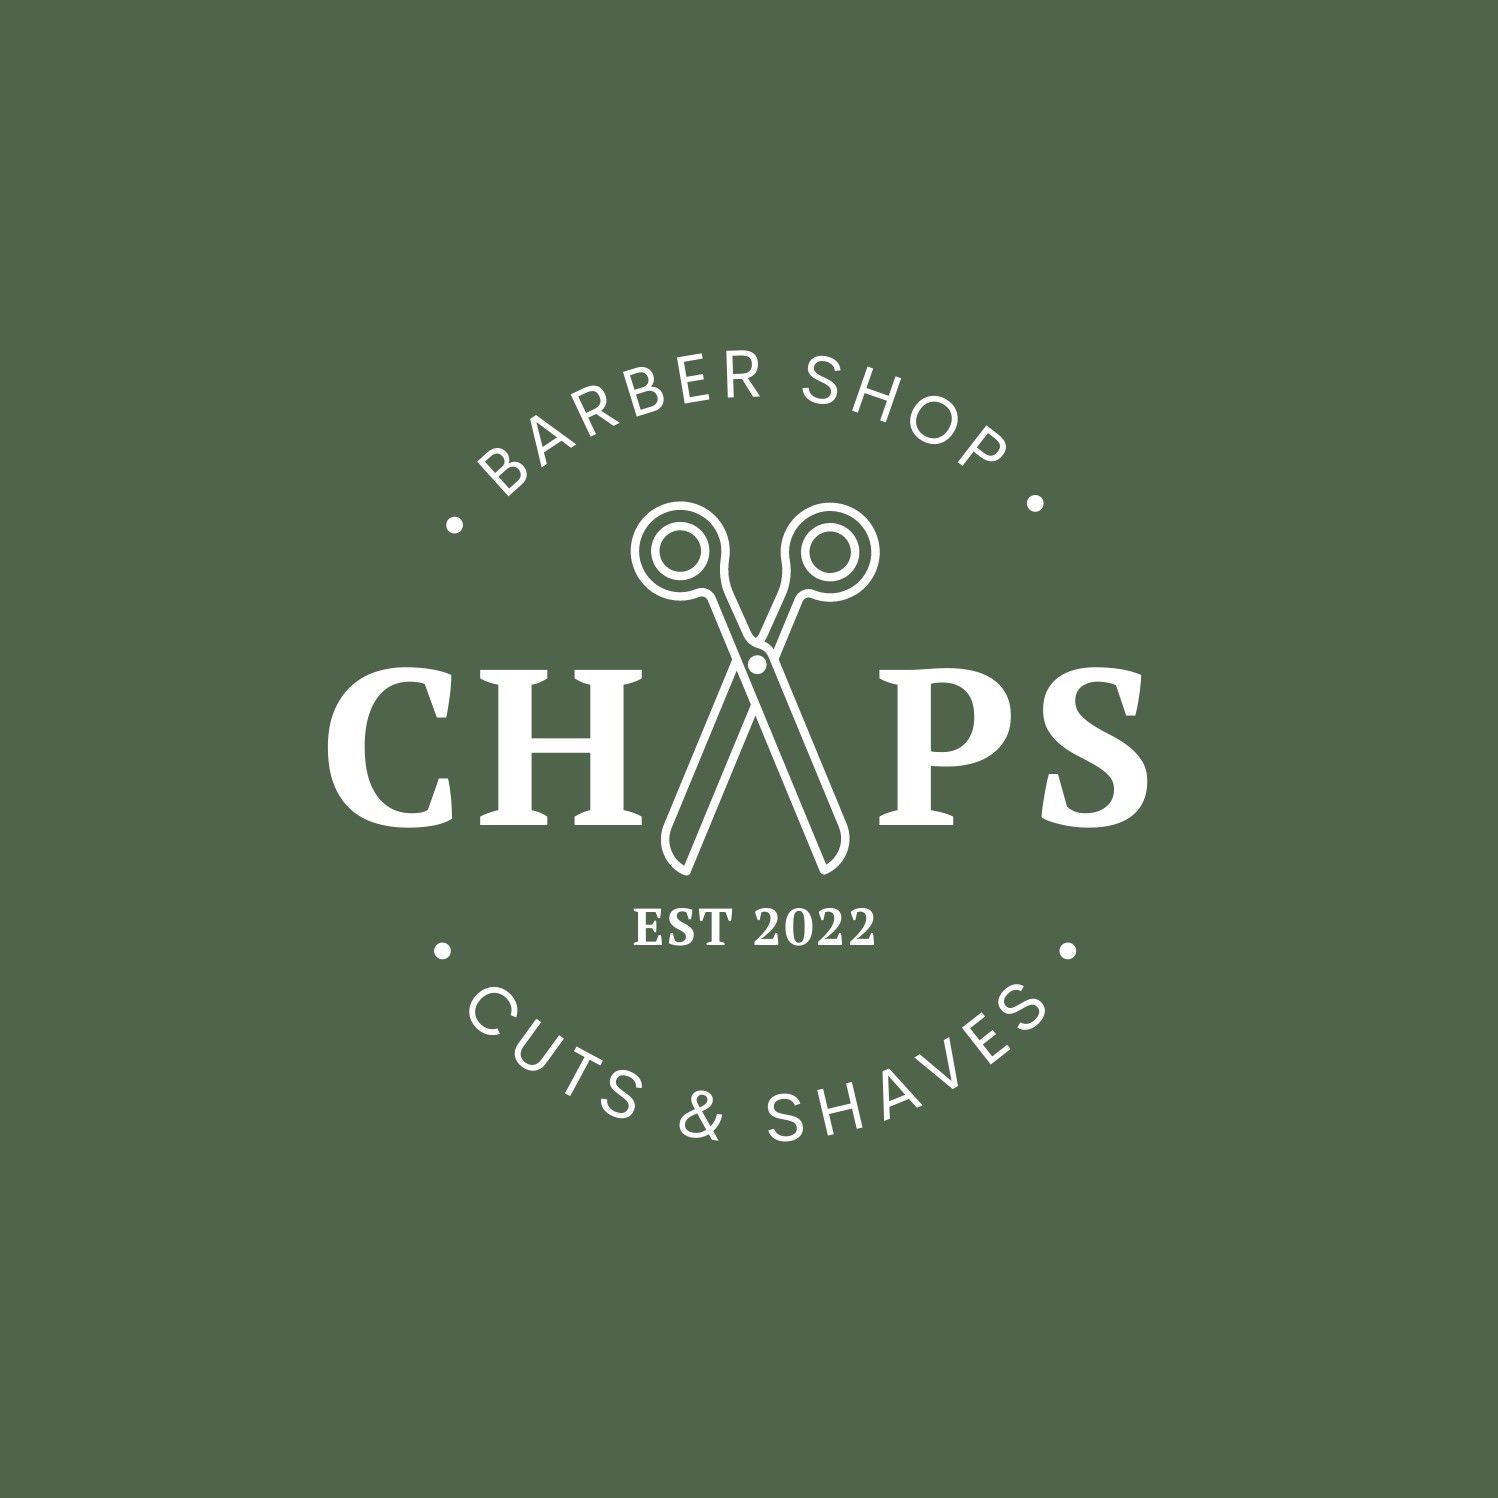 Chaps Barbershop West Lakes, 53 Philips Street, West Lakes, 5021, Adelaide